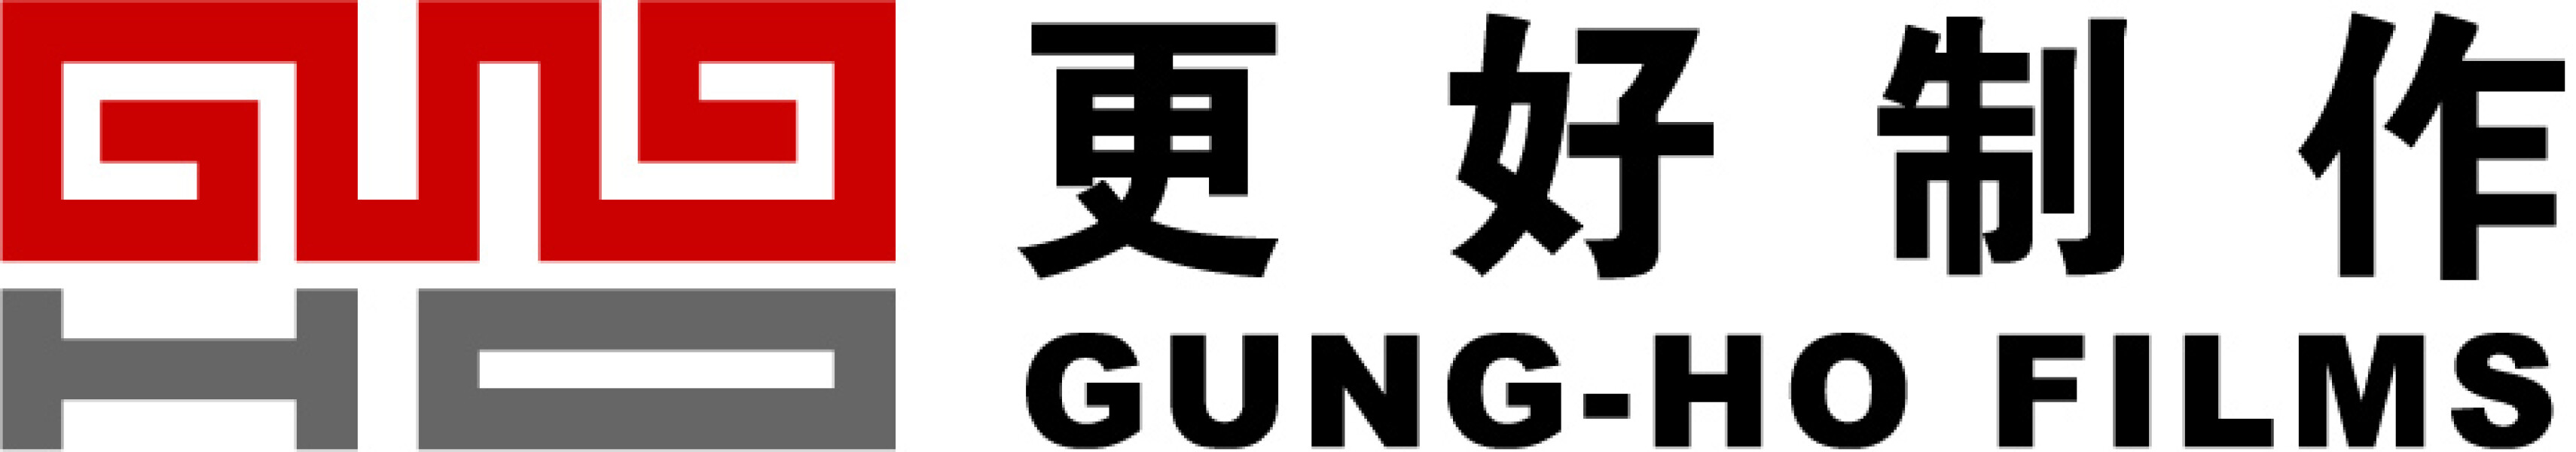 /assets/production_companies/gung_ho/ghf_logo.jpg